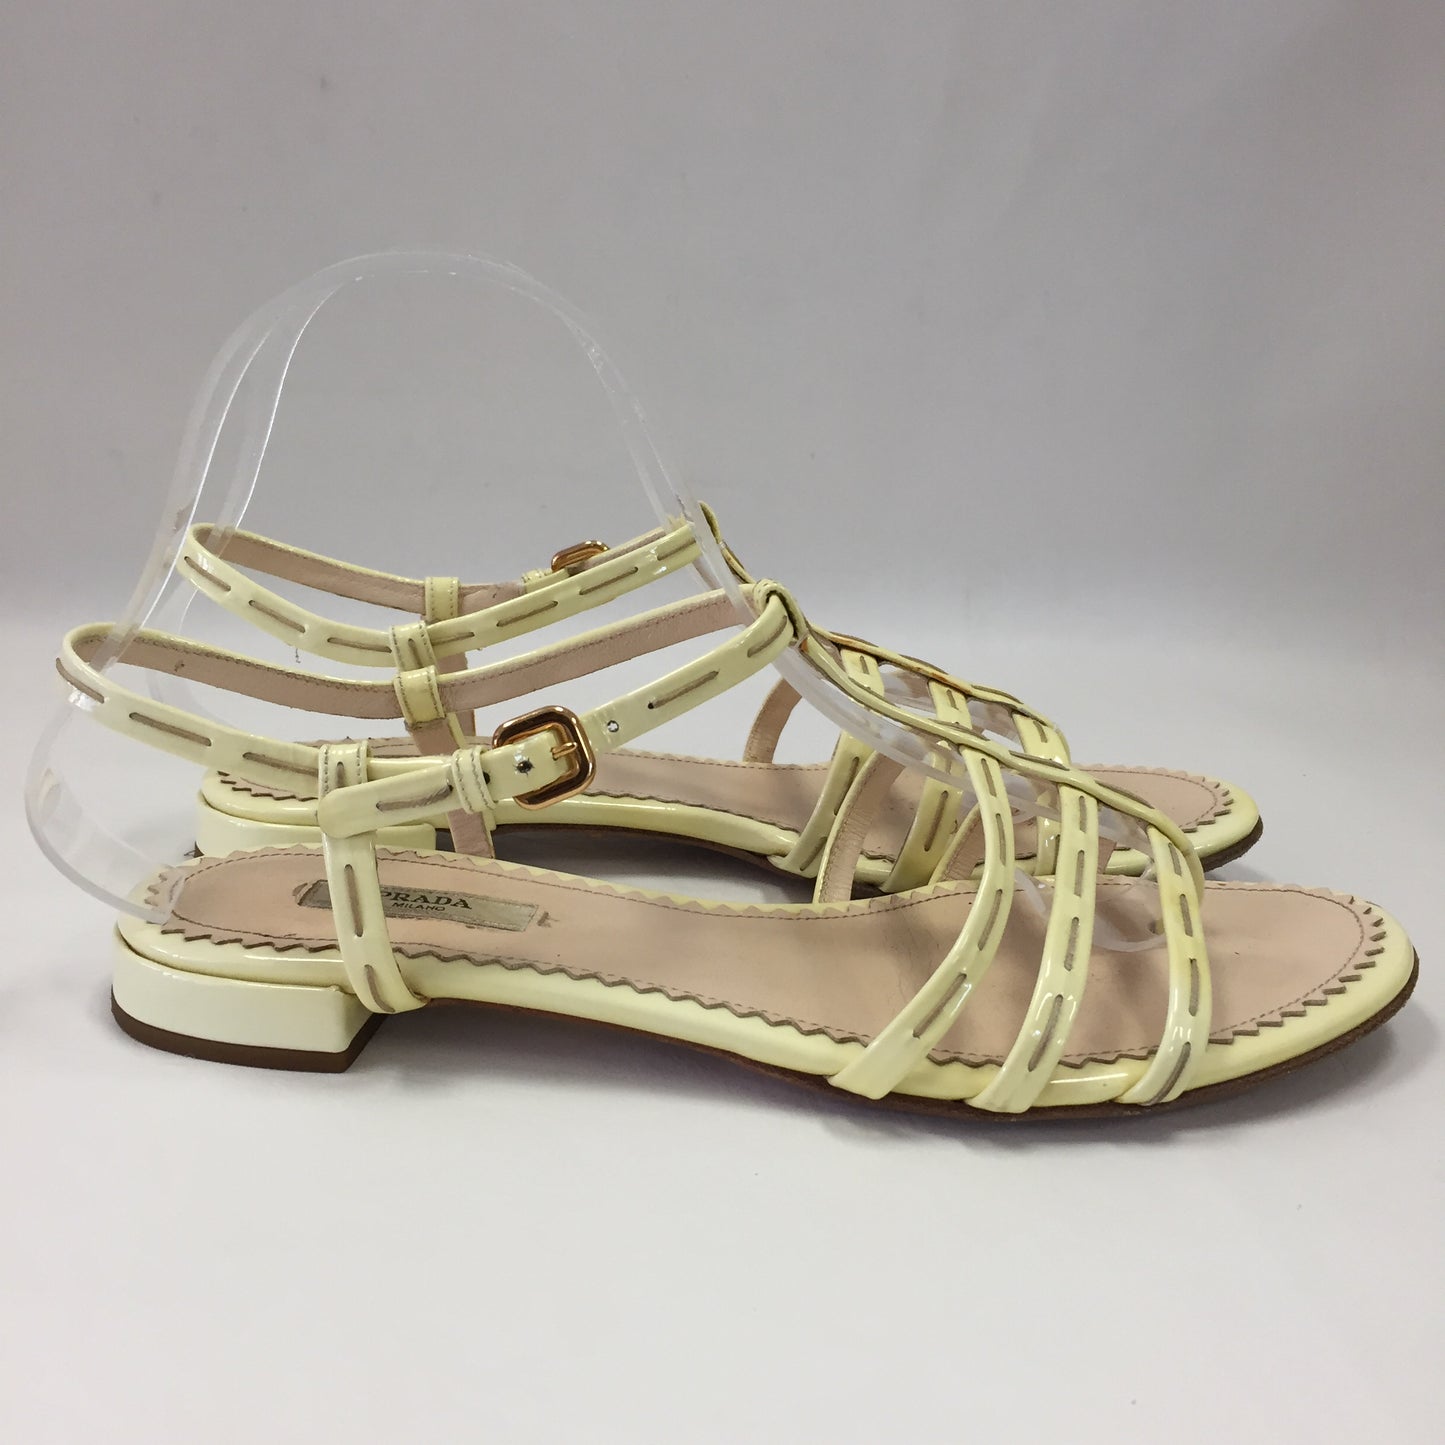 Authentic Prada Yellow Patent Flat Sandals Women's 38 / 7 - 7.5